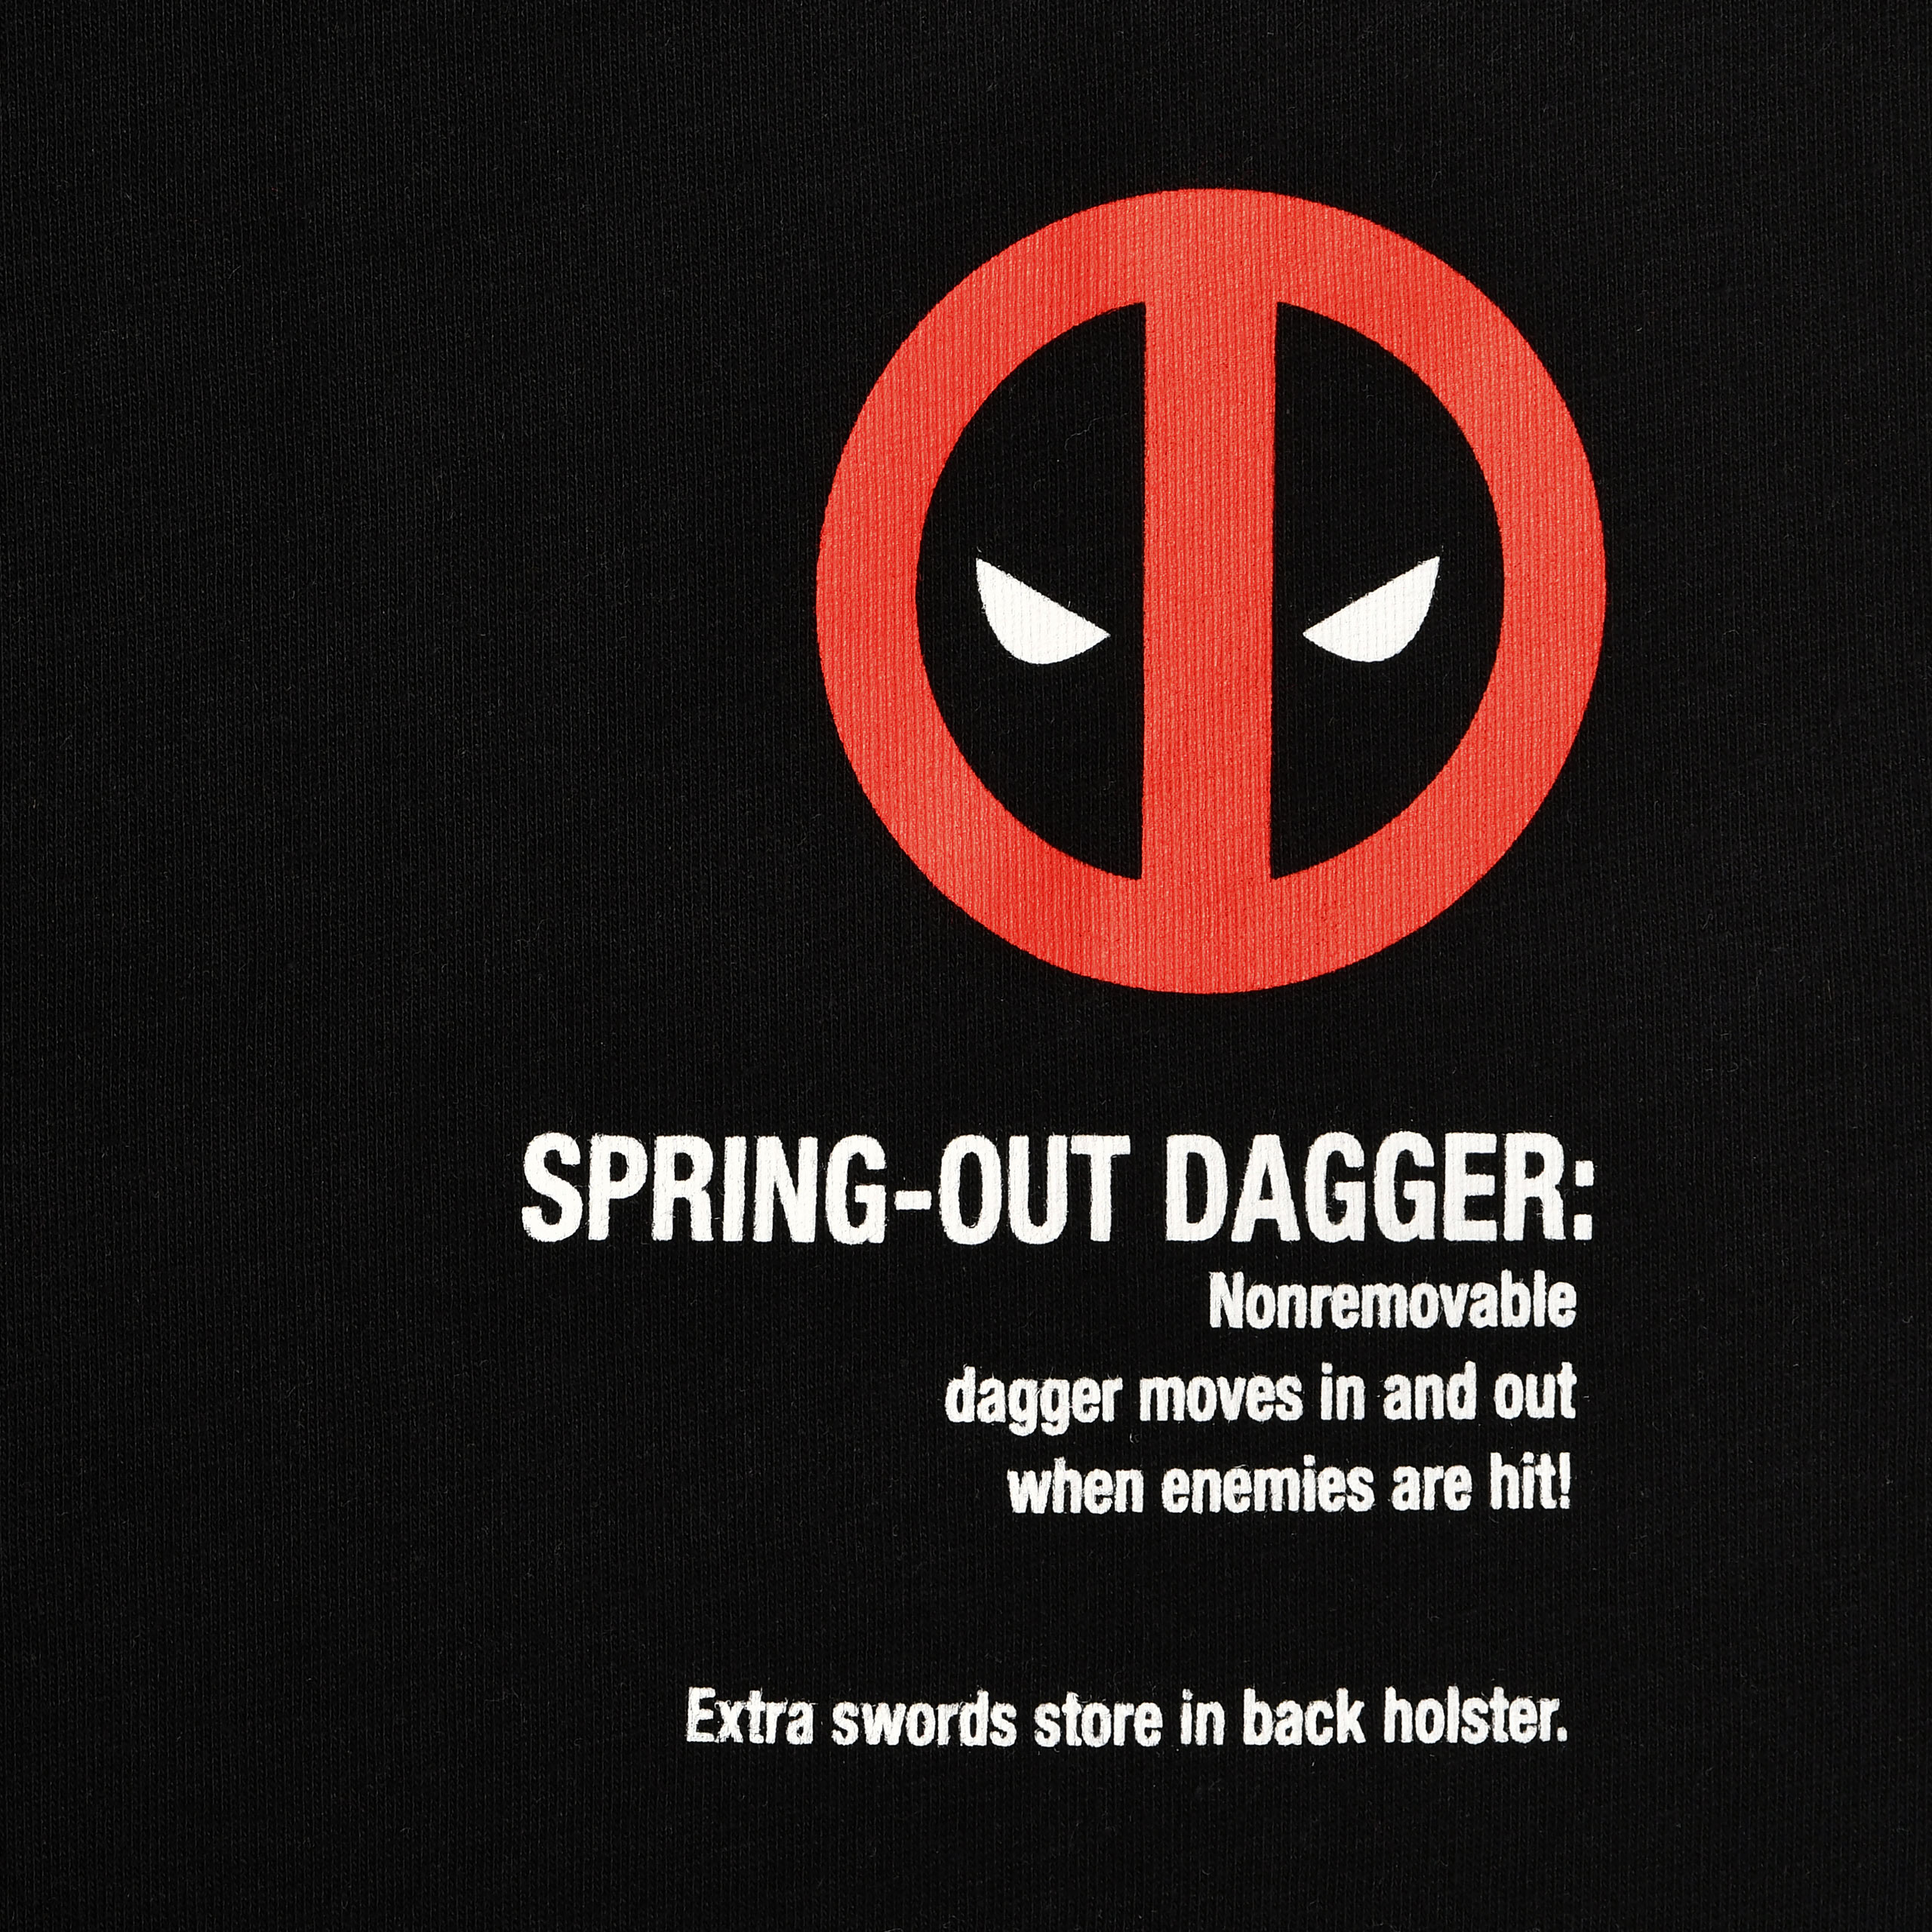 Deadpool - Wanted T-Shirt Black